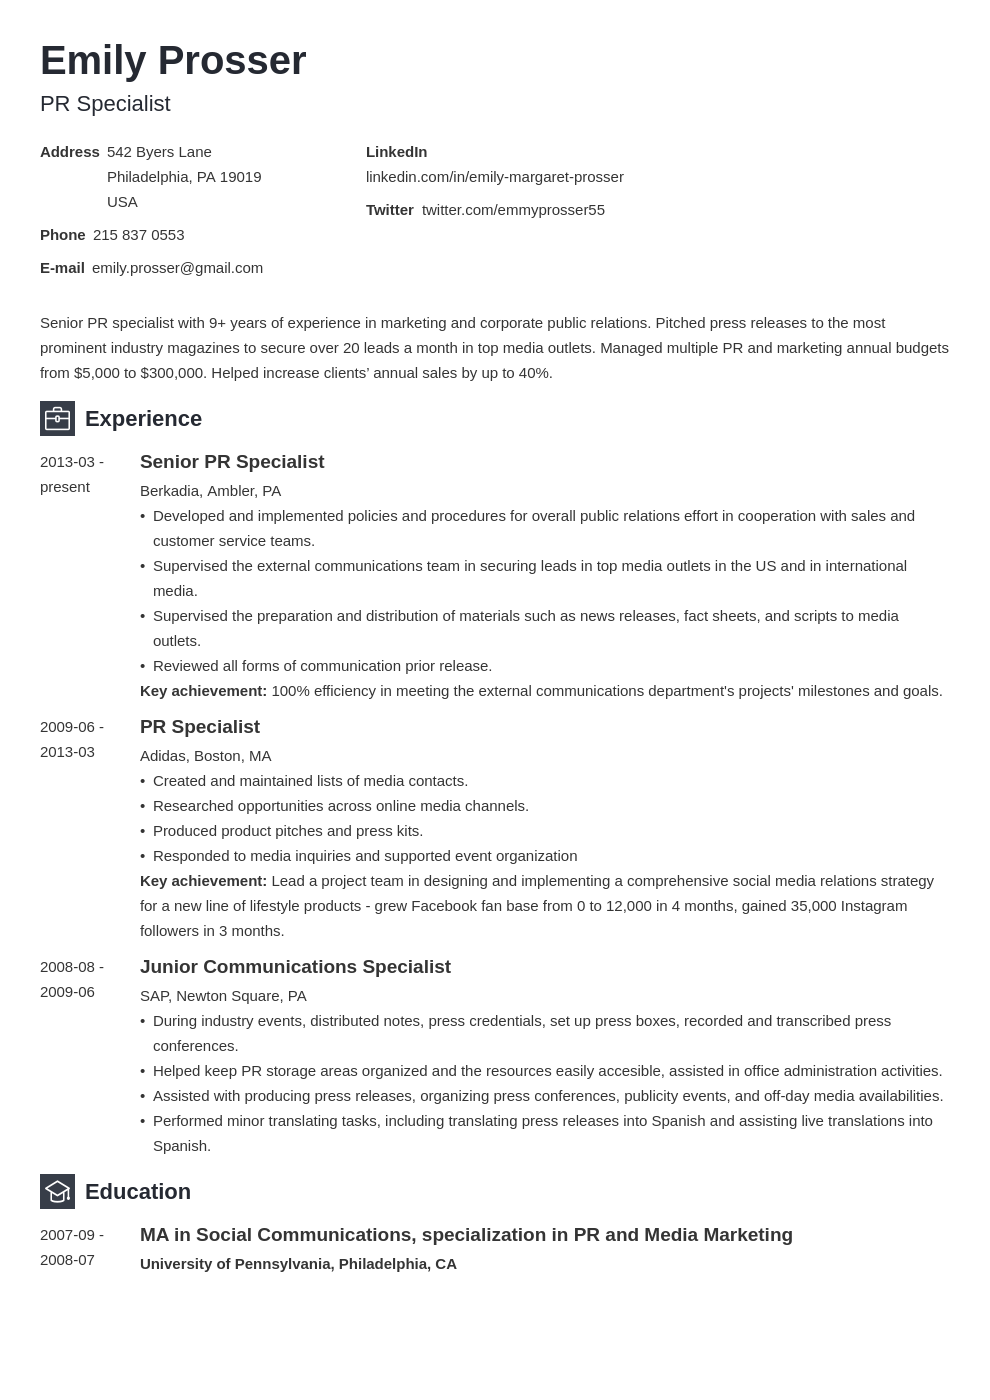 download additional resume templates google docs